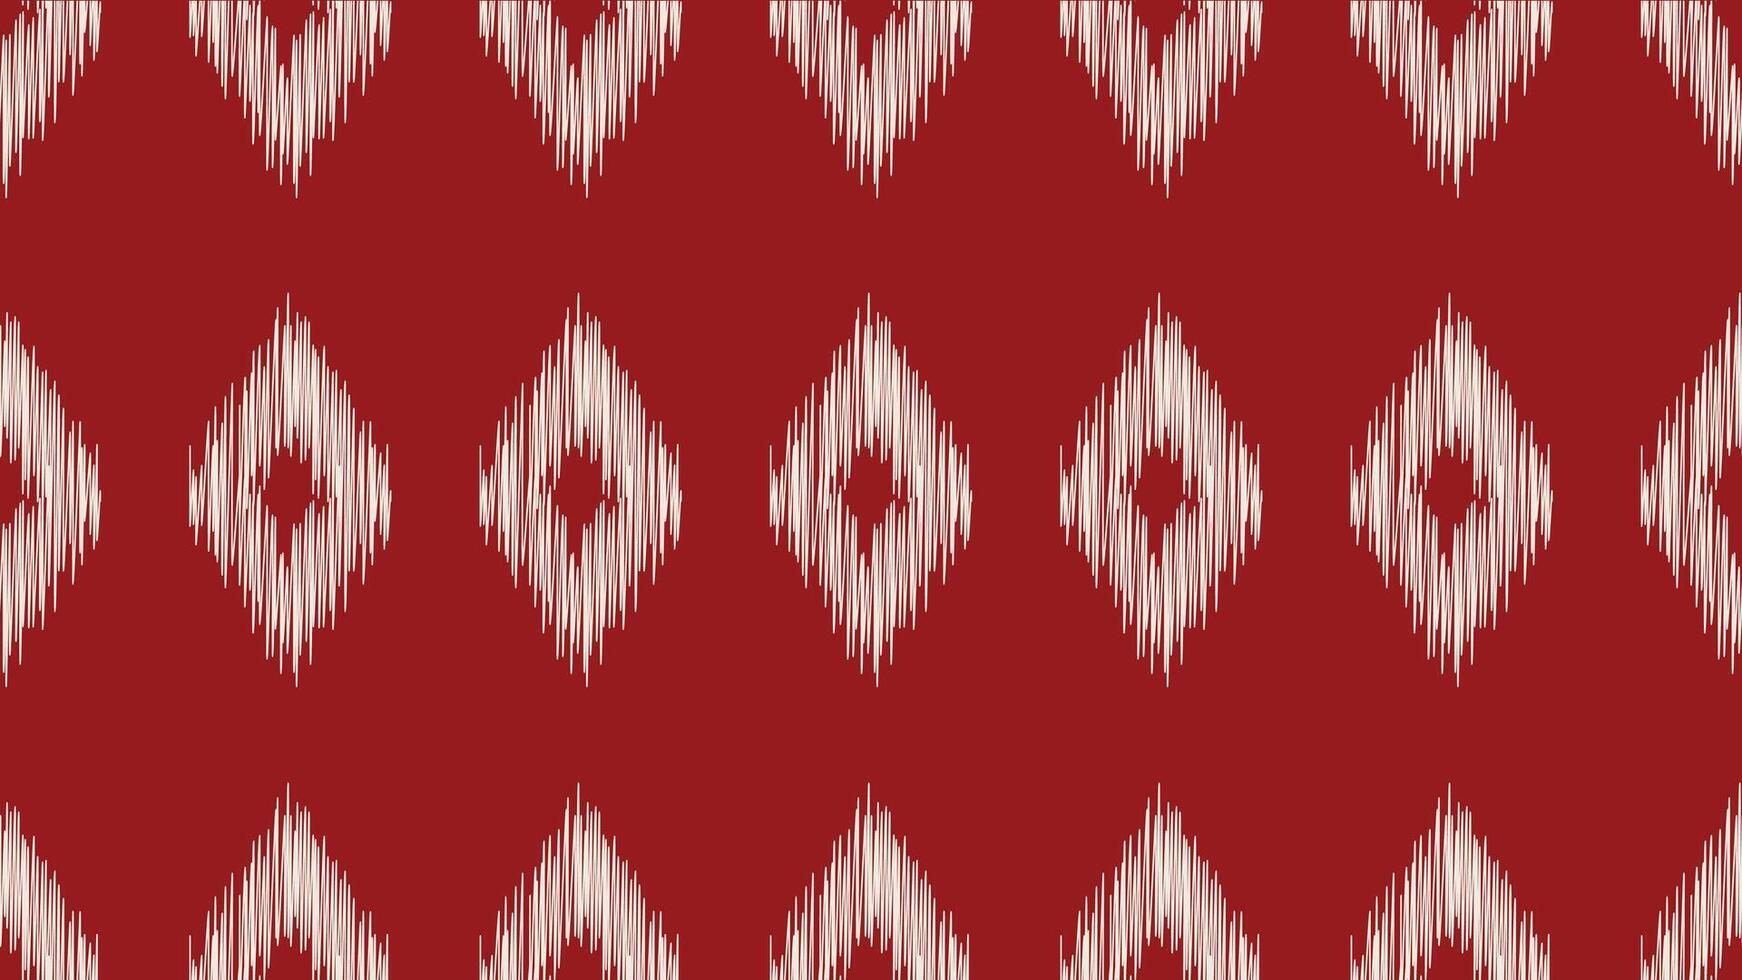 traditionell etnisk ikat motiv tyg mönster geometrisk stil.afrikansk ikat broderi etnisk orientalisk mönster röd bakgrund tapet. abstrakt, vektor, illustration.texture, ram, dekoration. vektor